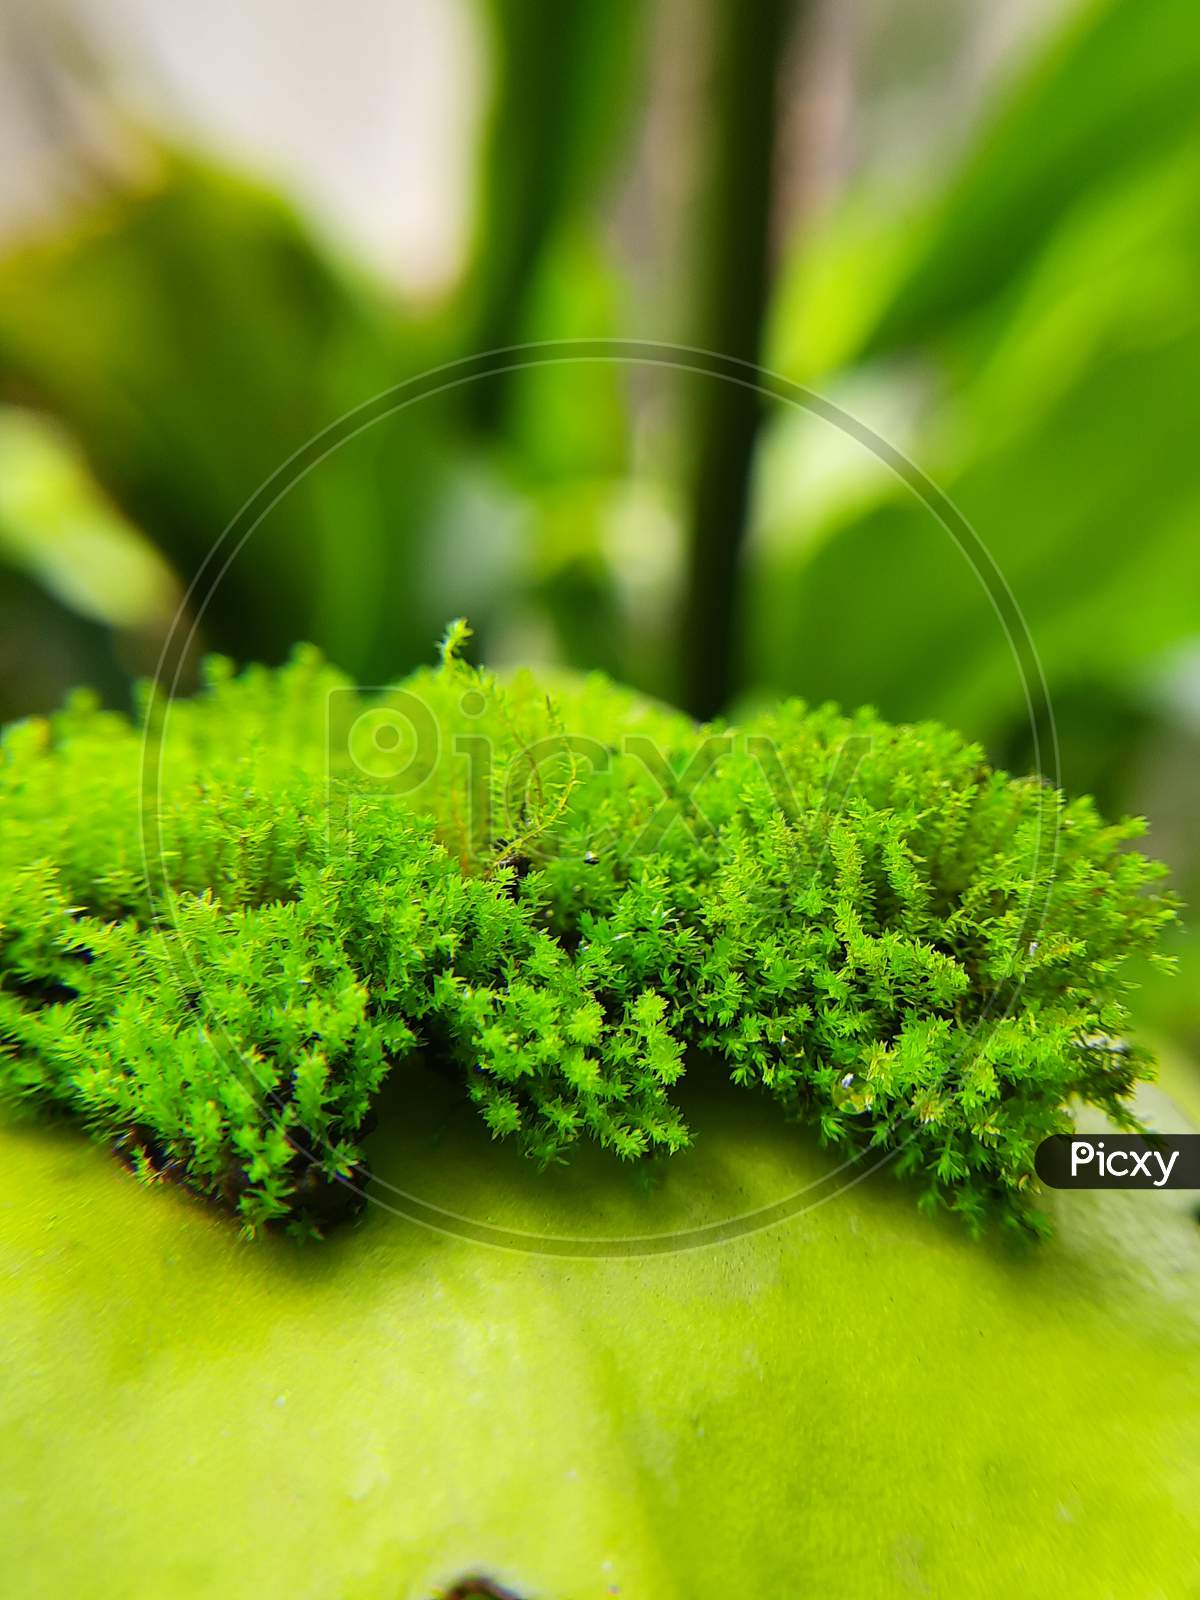 Moss island on a green leaf.